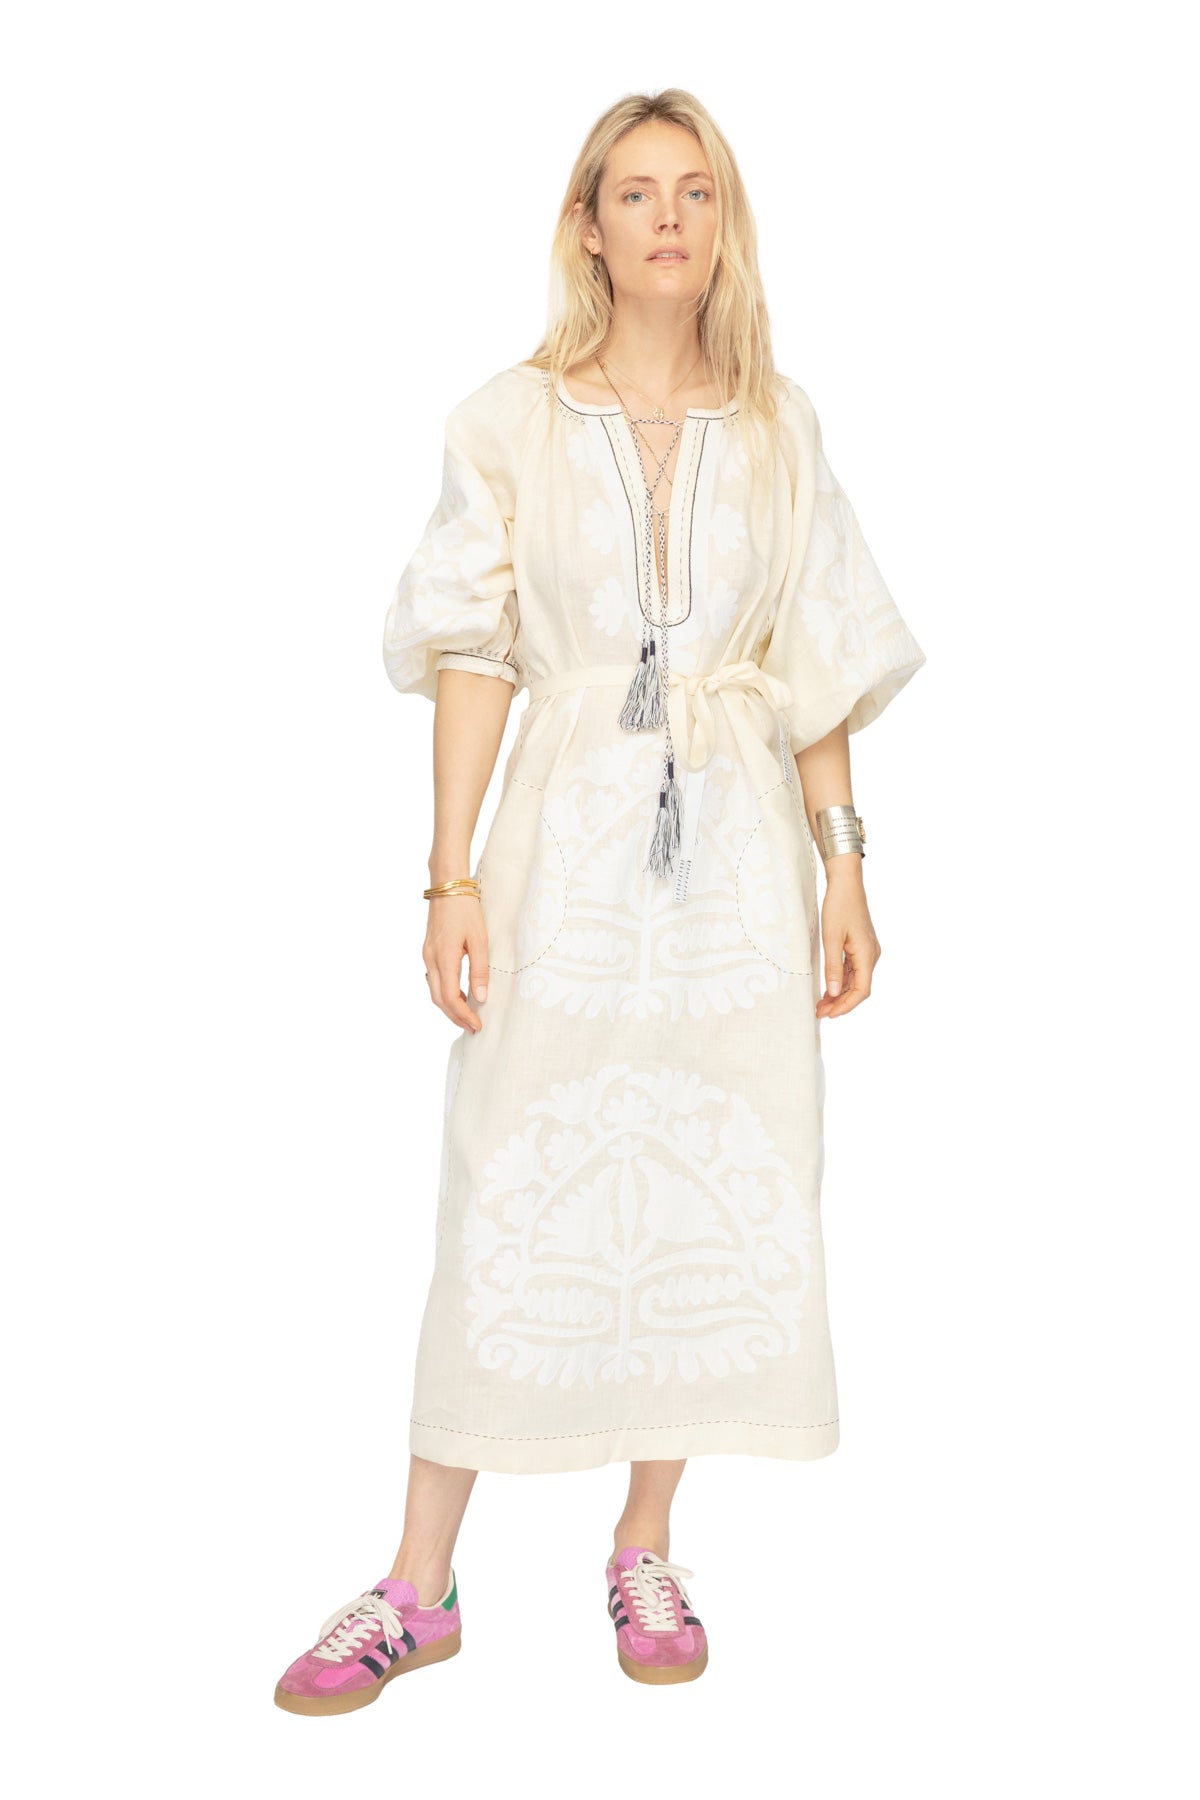 Shalimar Dress - Cream & White